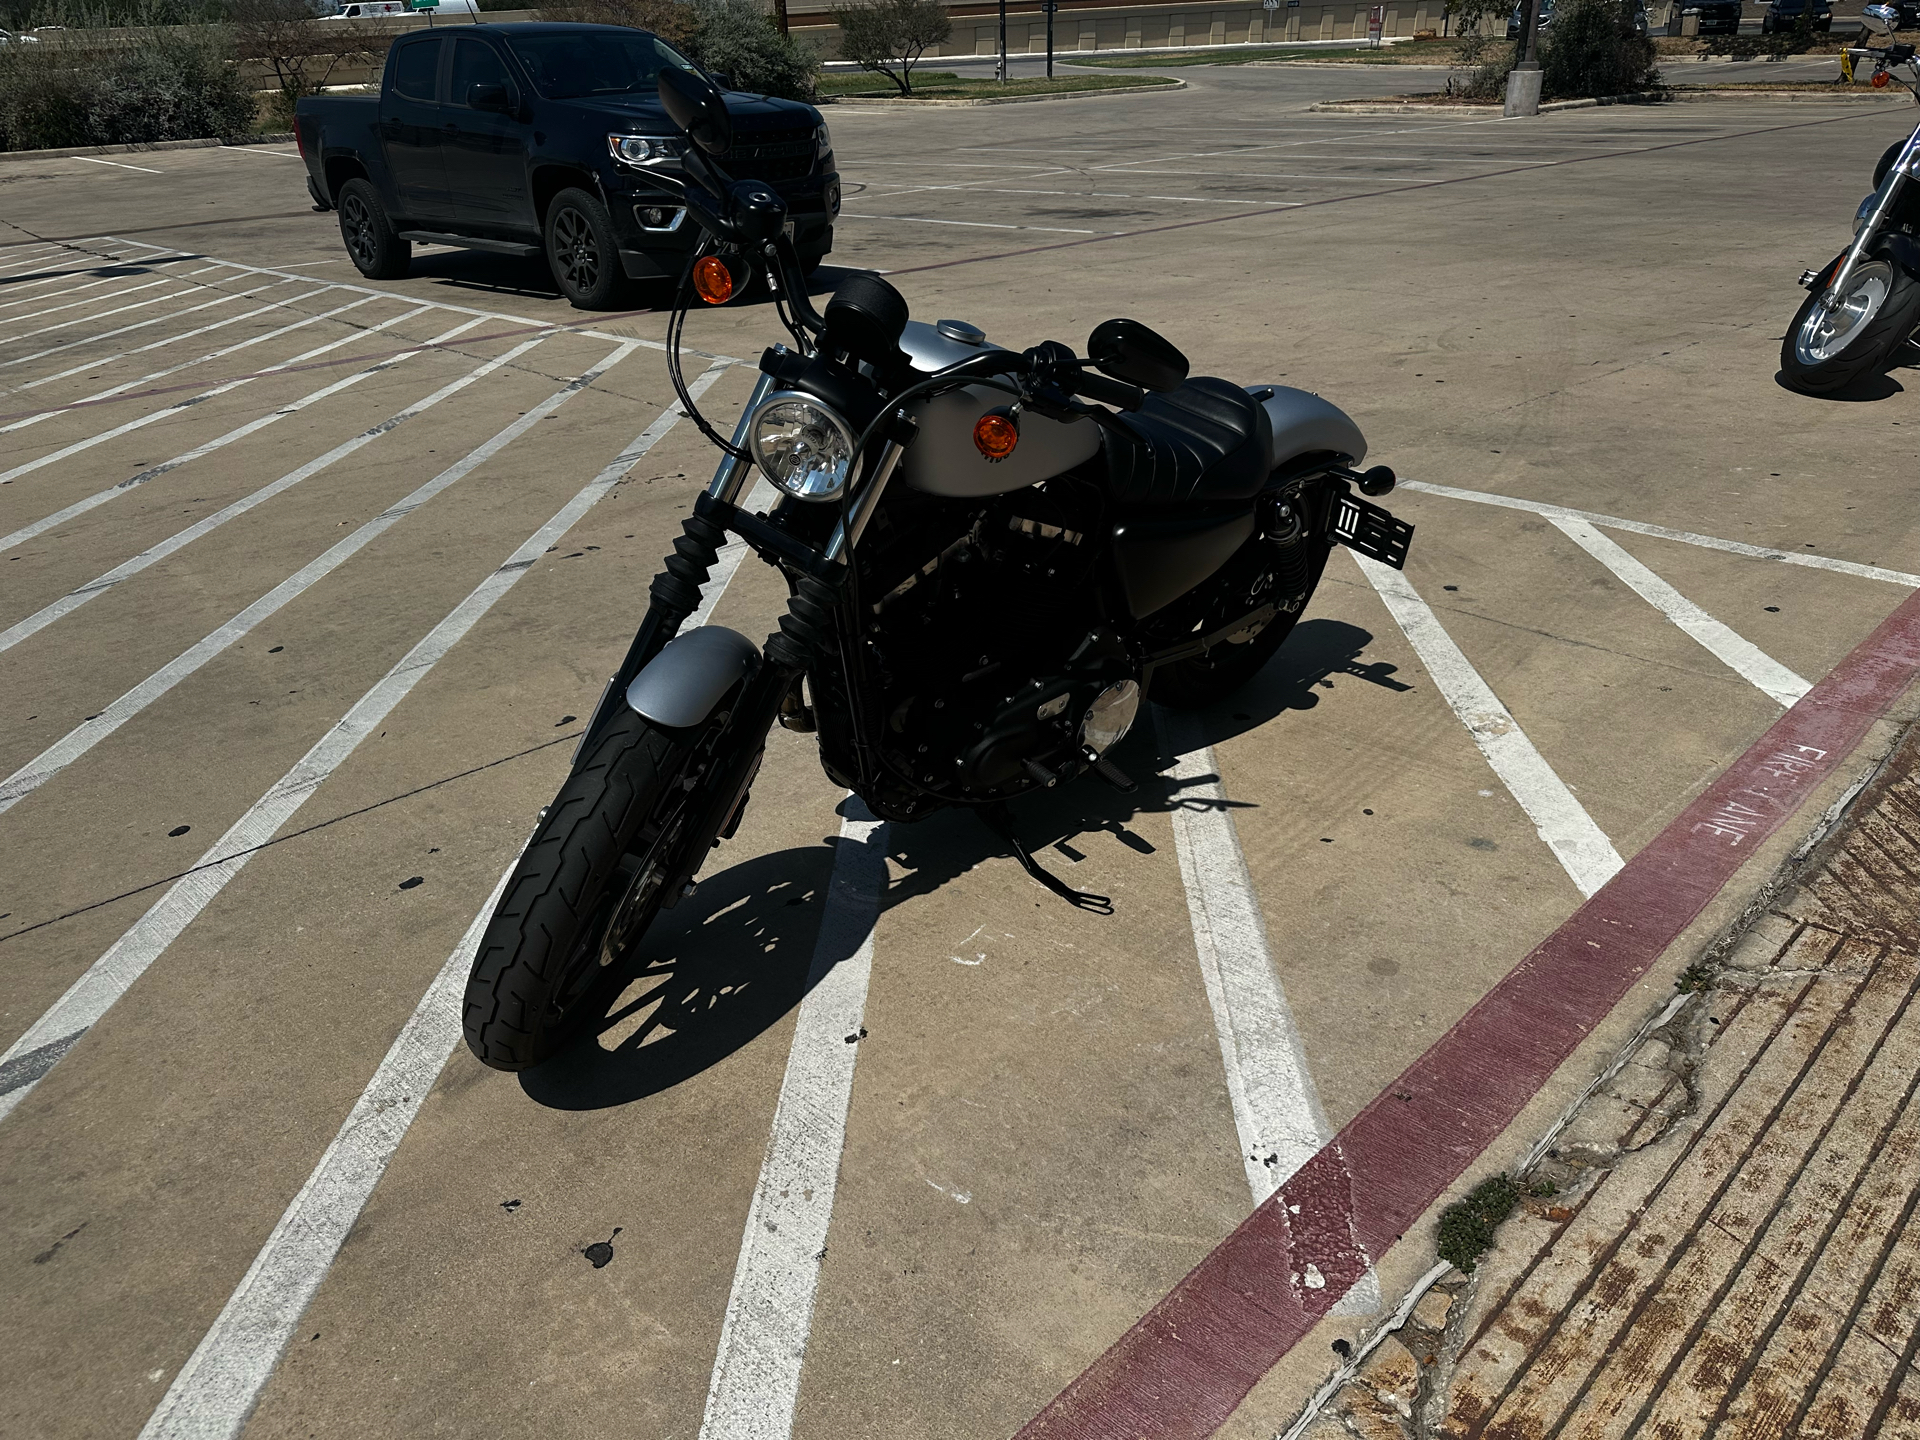 2020 Harley-Davidson Iron 883™ in San Antonio, Texas - Photo 4